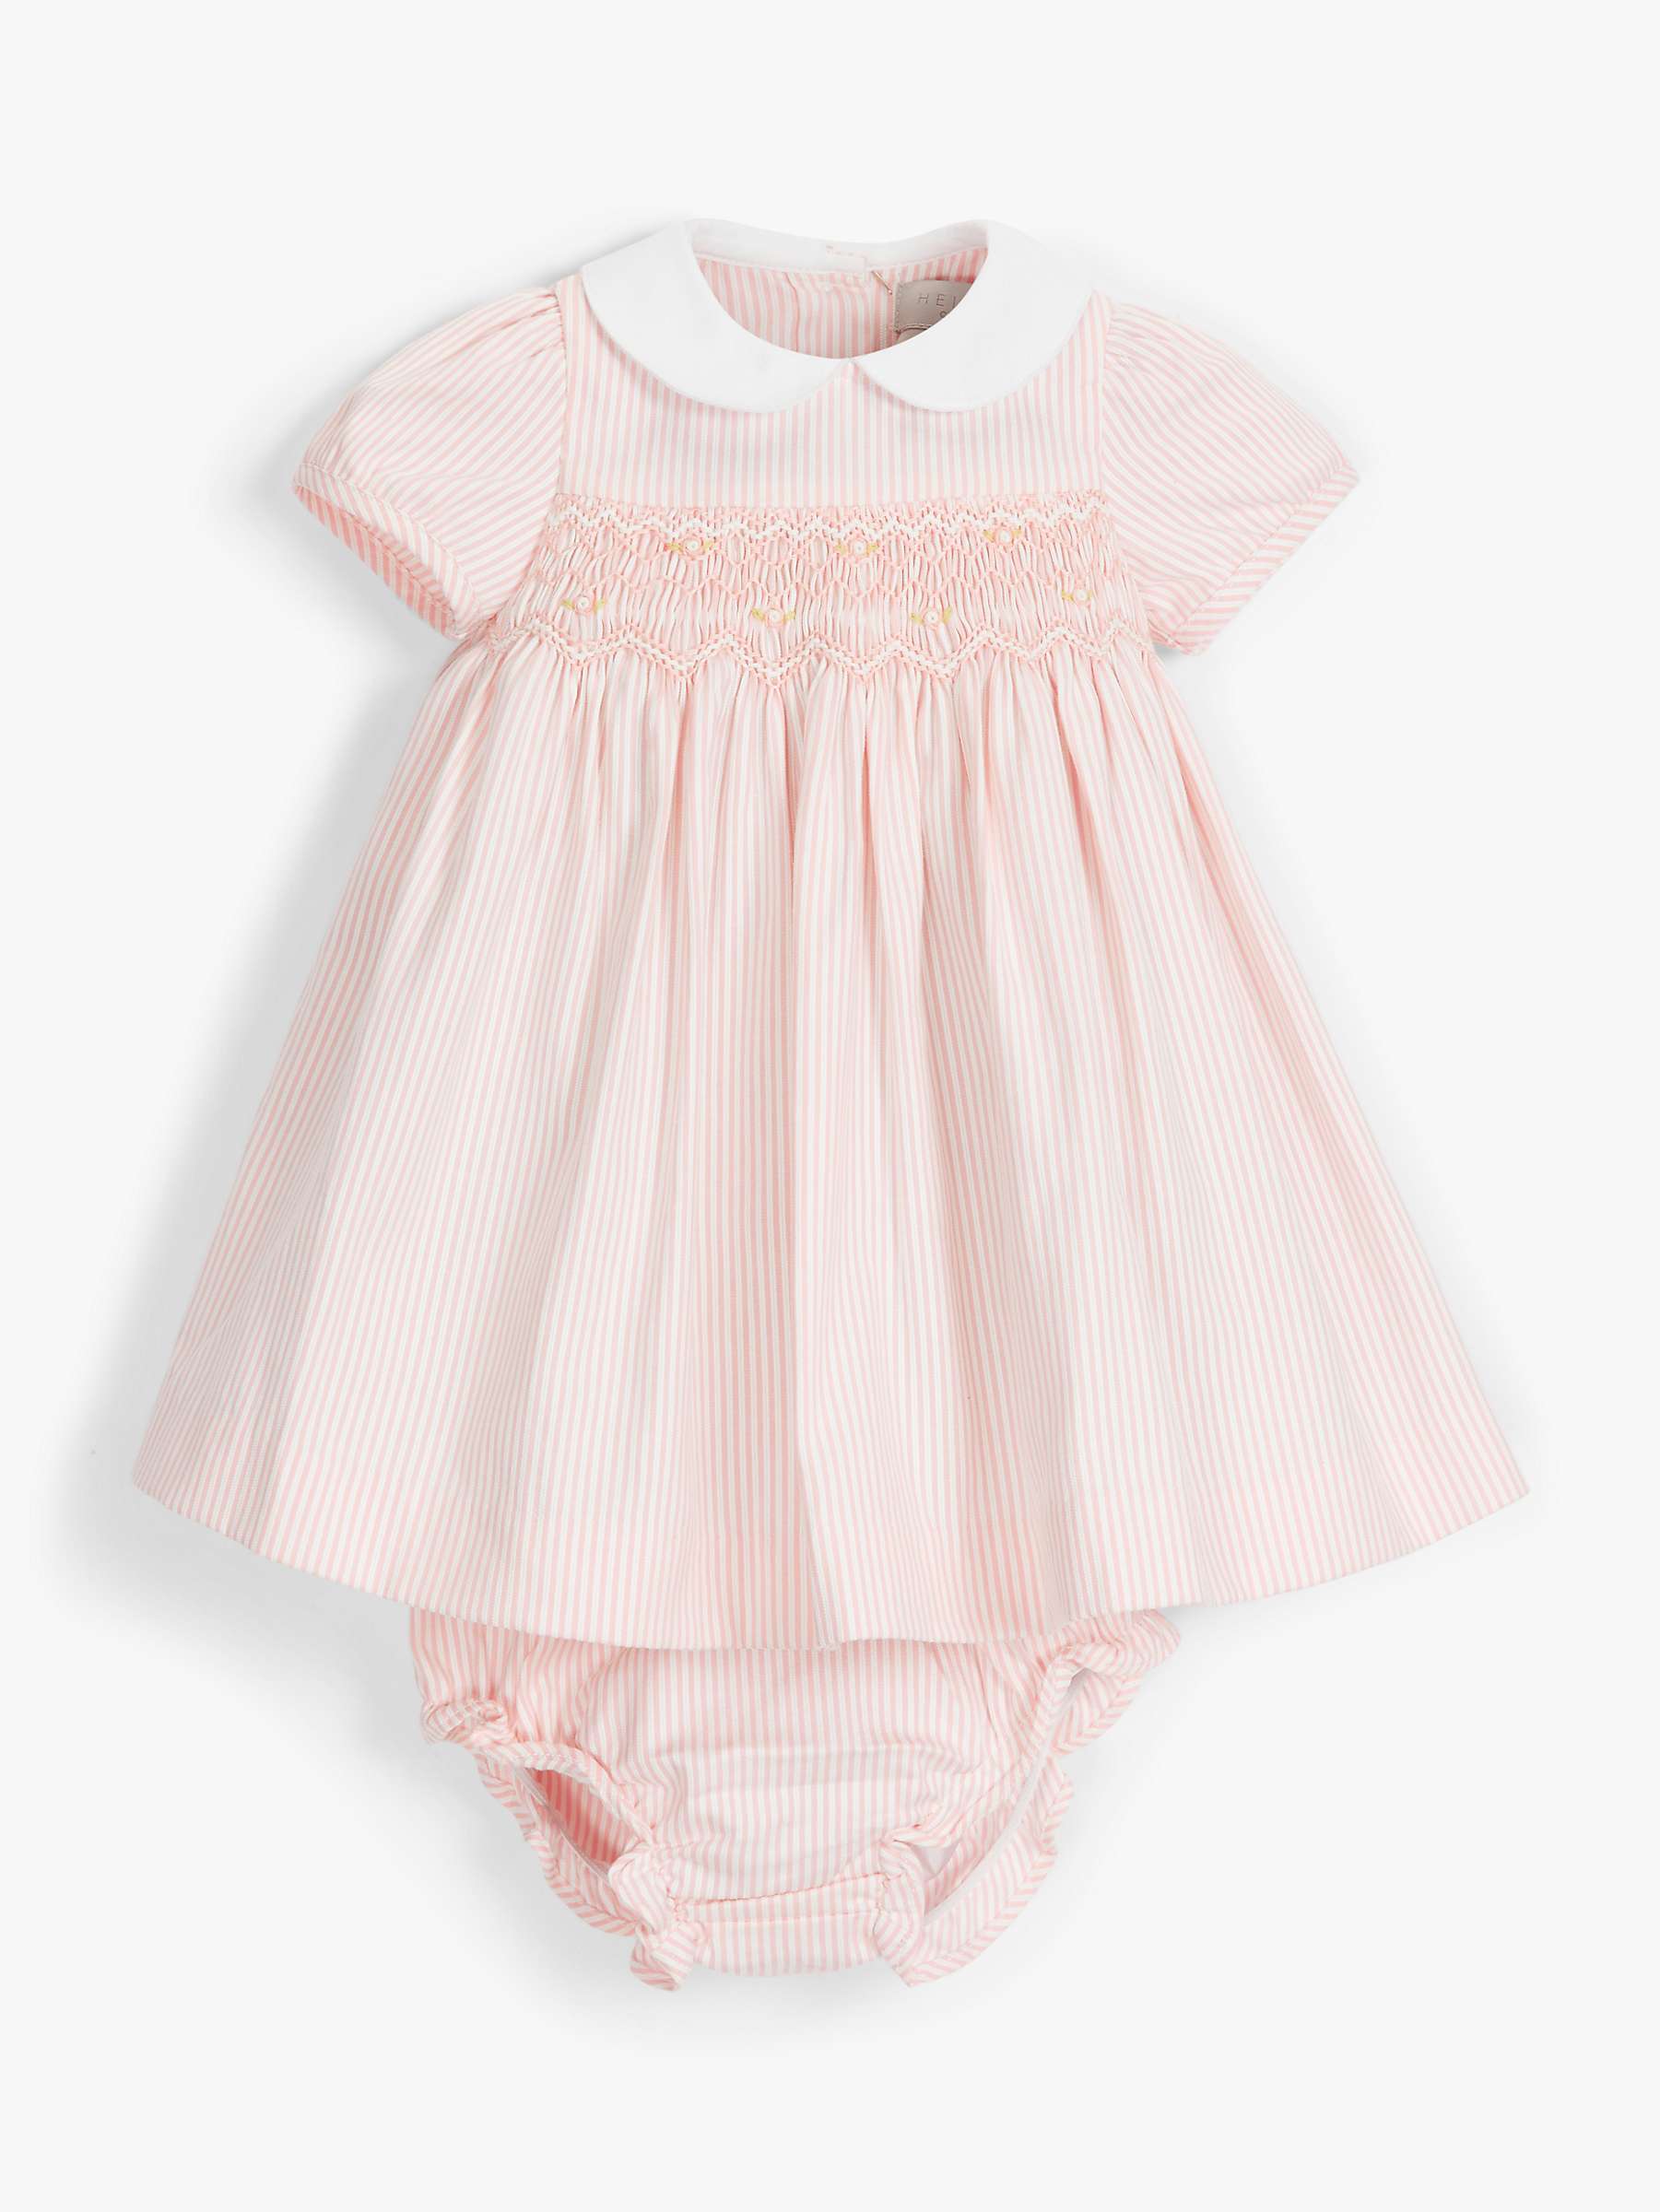 John Lewis John Lewis baby girls pink short sleeve frill floral dress 9-12 months 